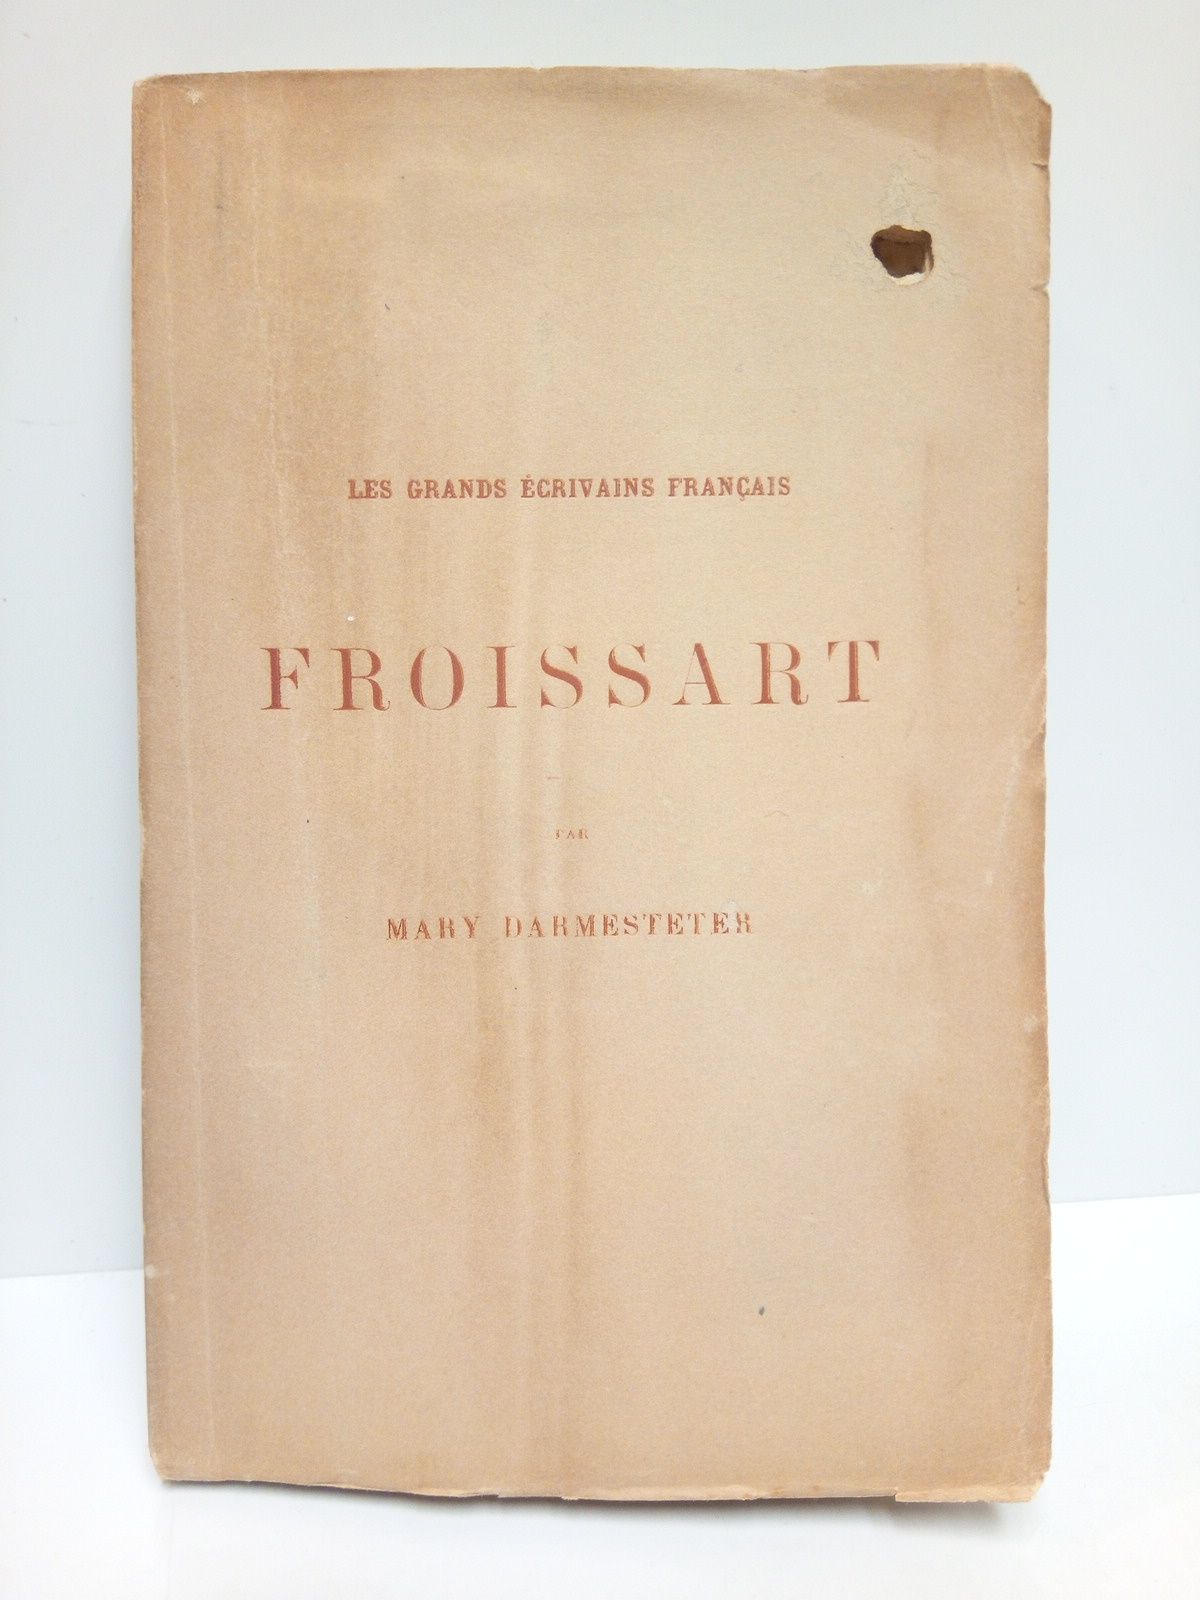 DARMESTETER, Mary - Froissart